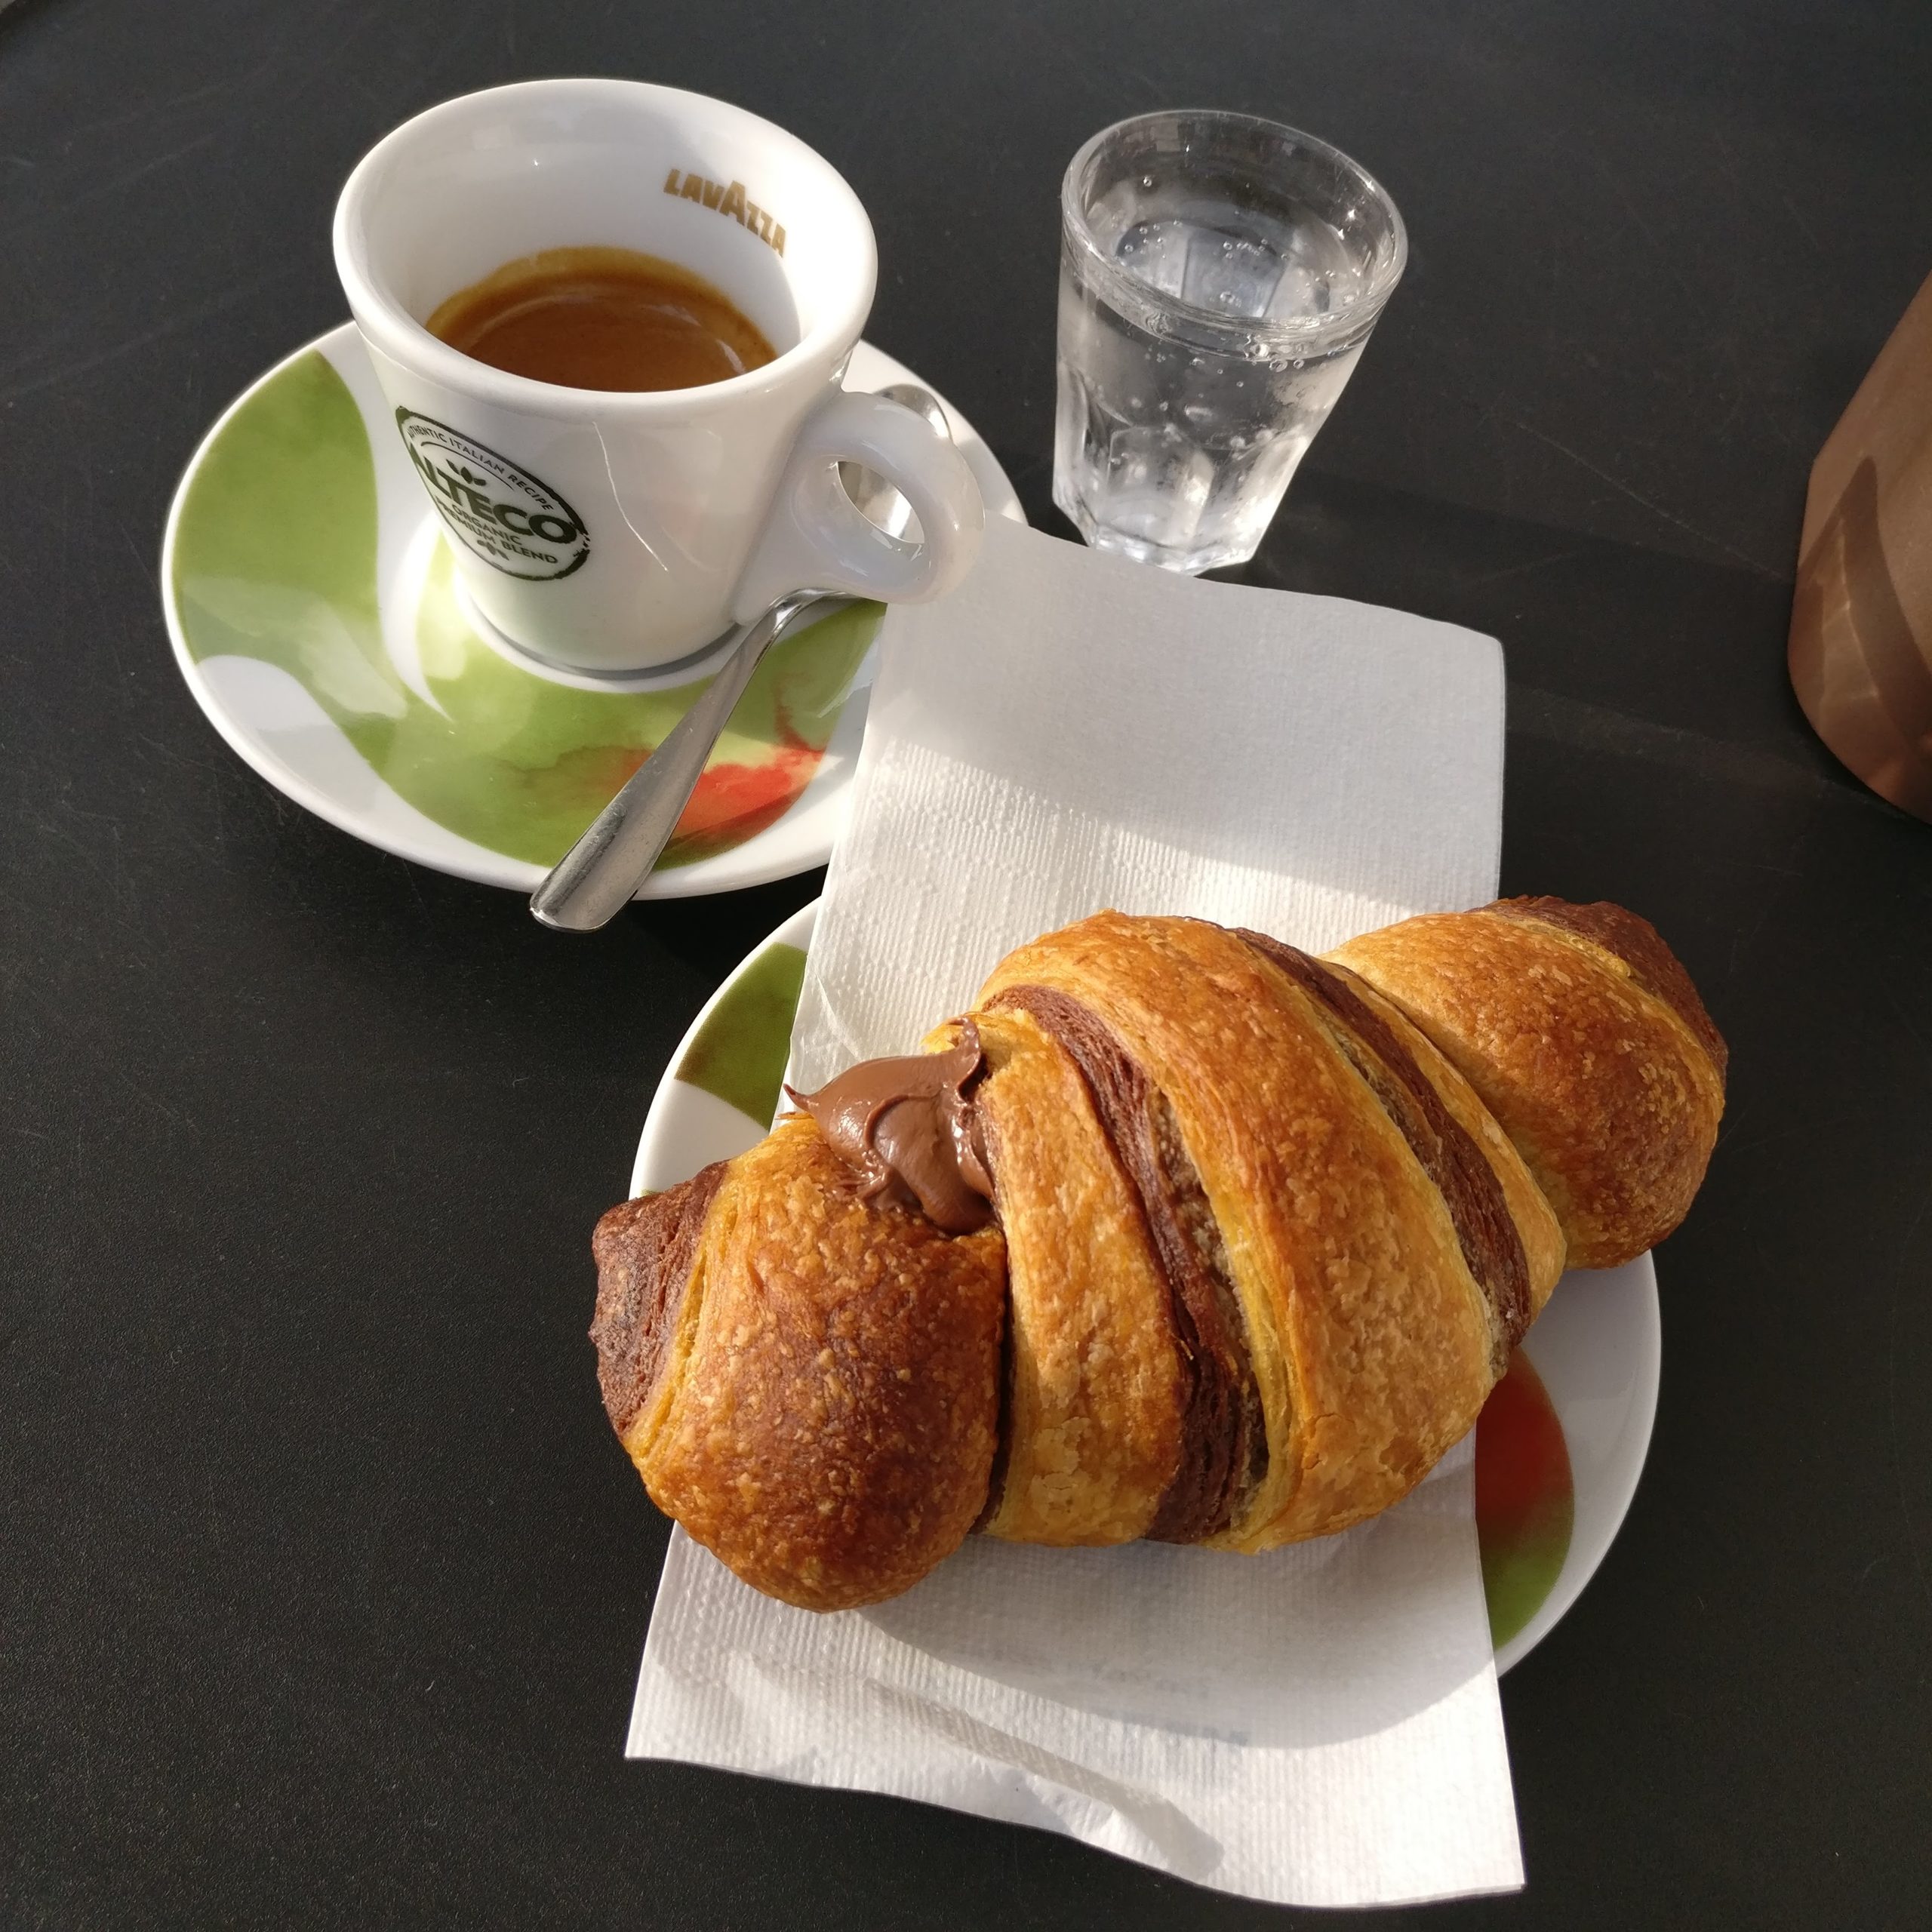 Kozina - 🇮🇹 presse à café 3 tasses made in Italie 🇮🇹